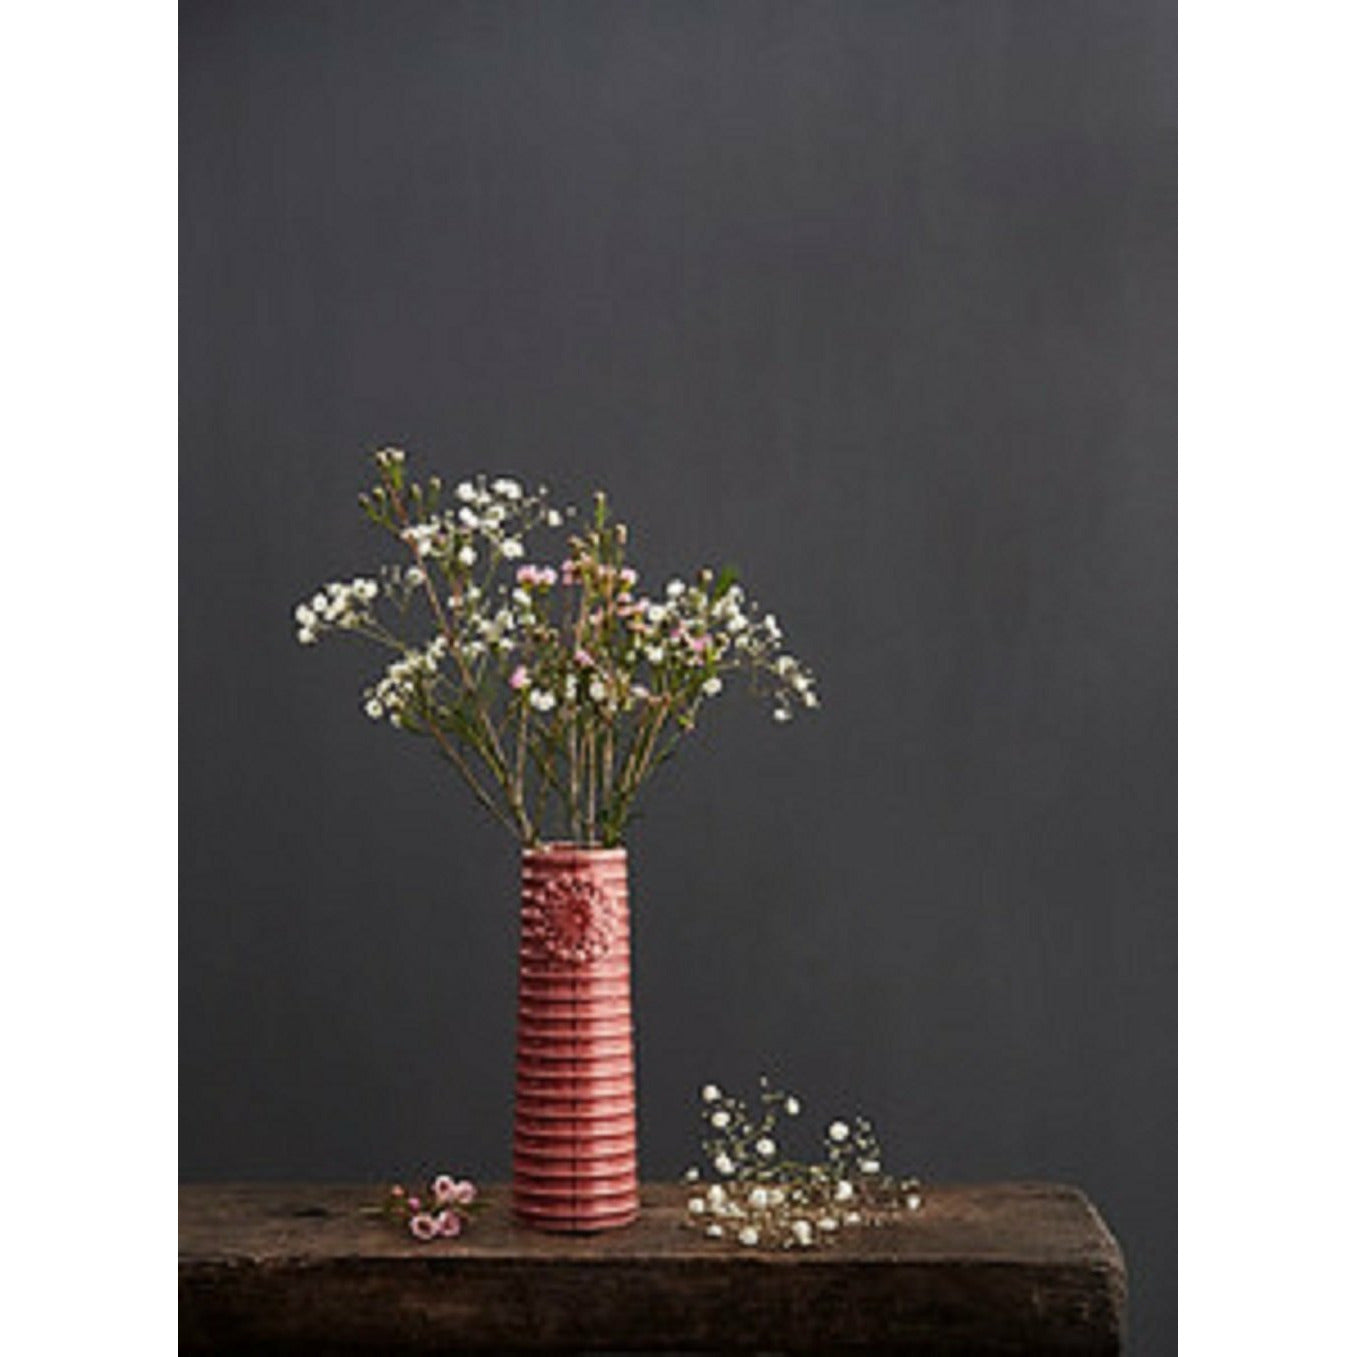 Dottir Pipanella Lines Vase White, 16,5cm